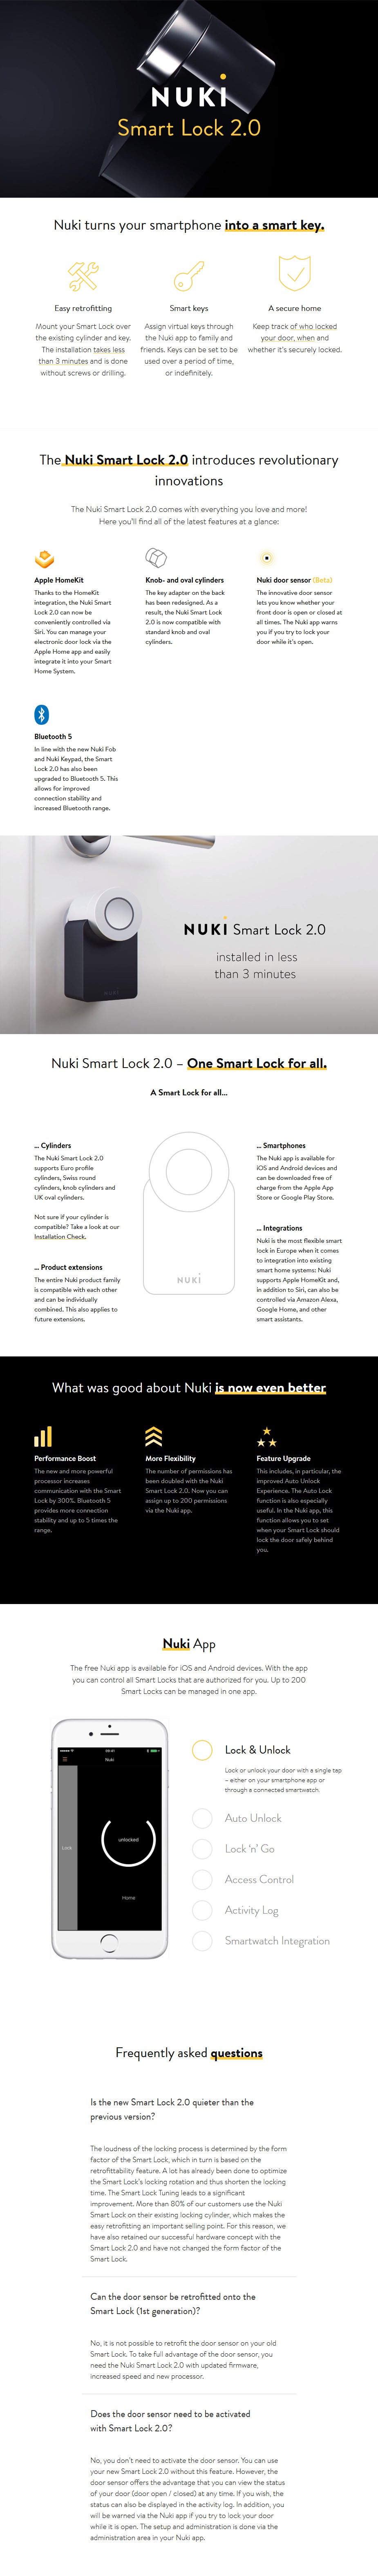 A large marketing image providing additional information about the product Nuki Smart Lock 2.0 & Bridge Combo - Additional alt info not provided